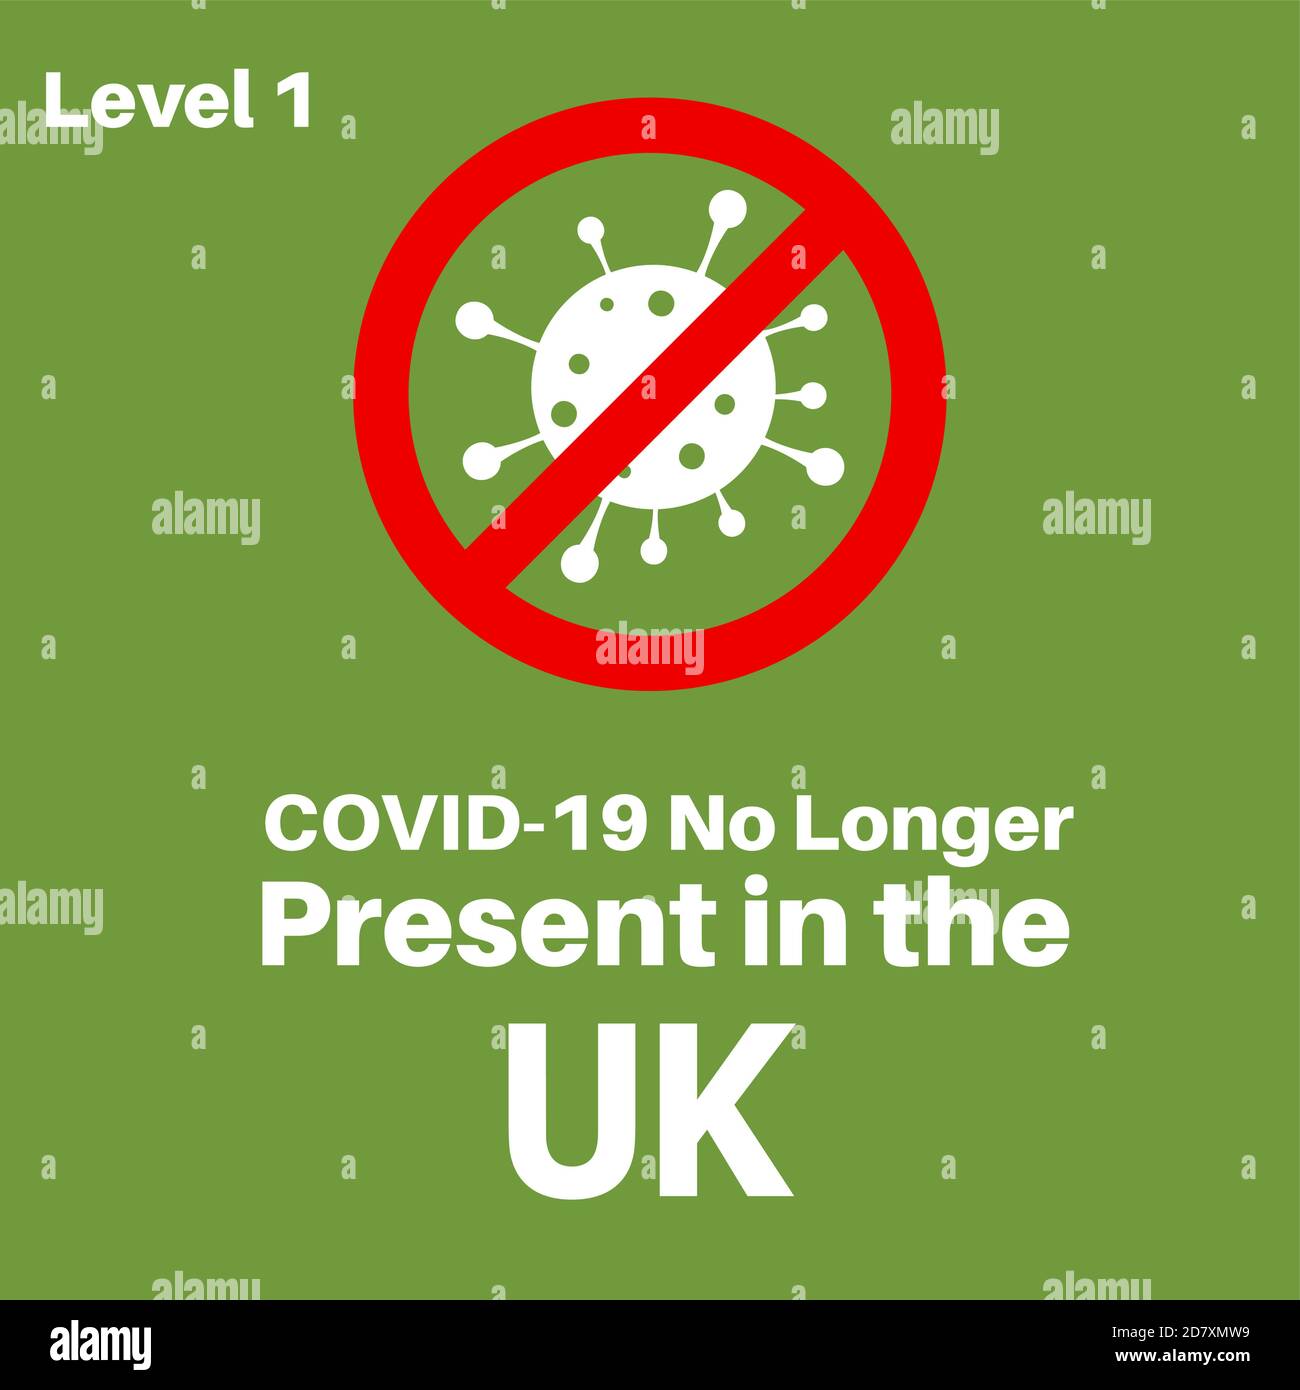 Coronavirus Alert Levels vector illustration Stock Vector